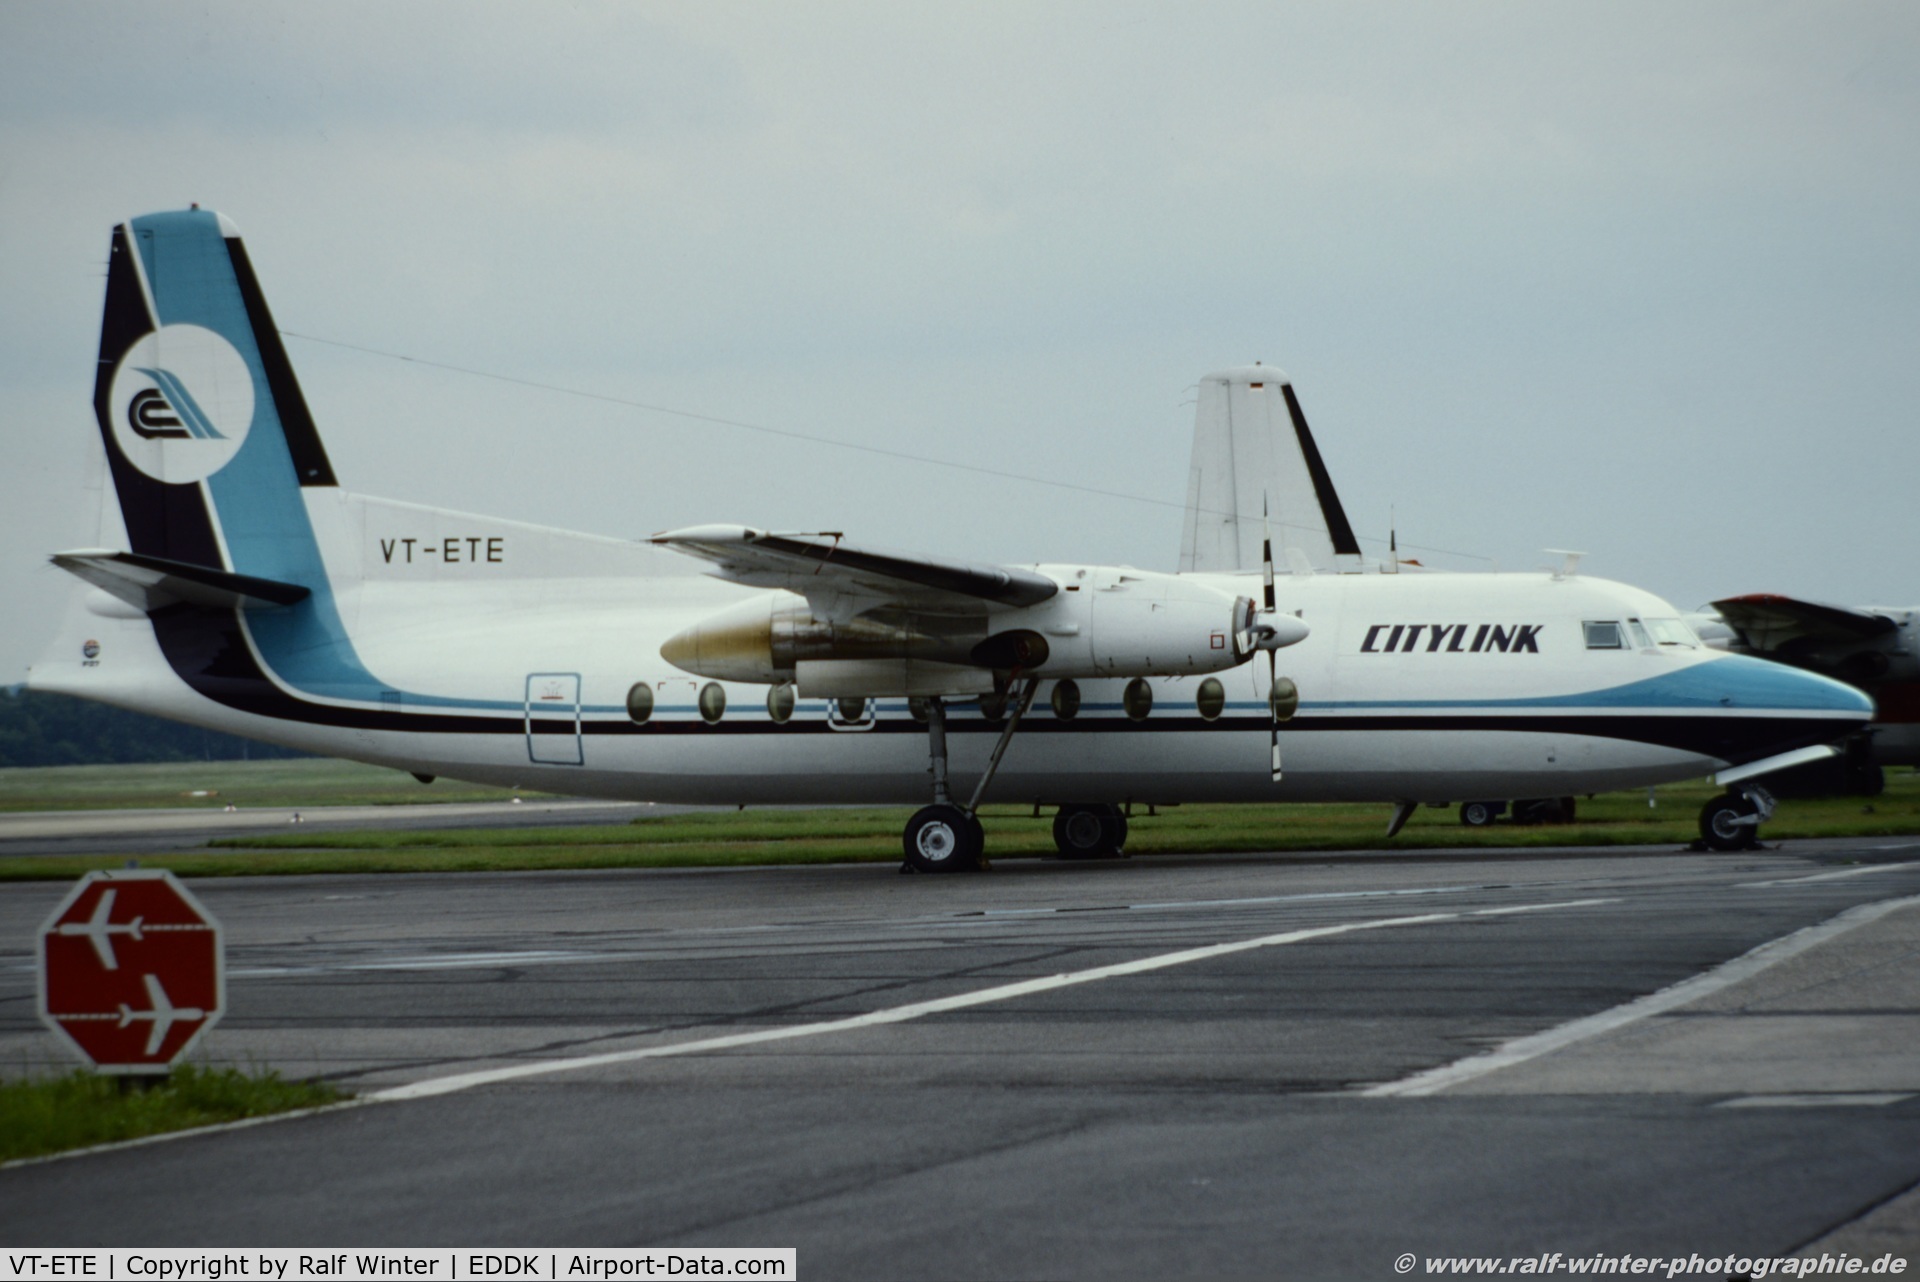 VT-ETE, 1969 Fokker F-27-200 Friendship C/N 10414, Fokker F27-200 Friendship - XF Citylink Airways - 10414 - VT-ETE - 05.1993 - CGN